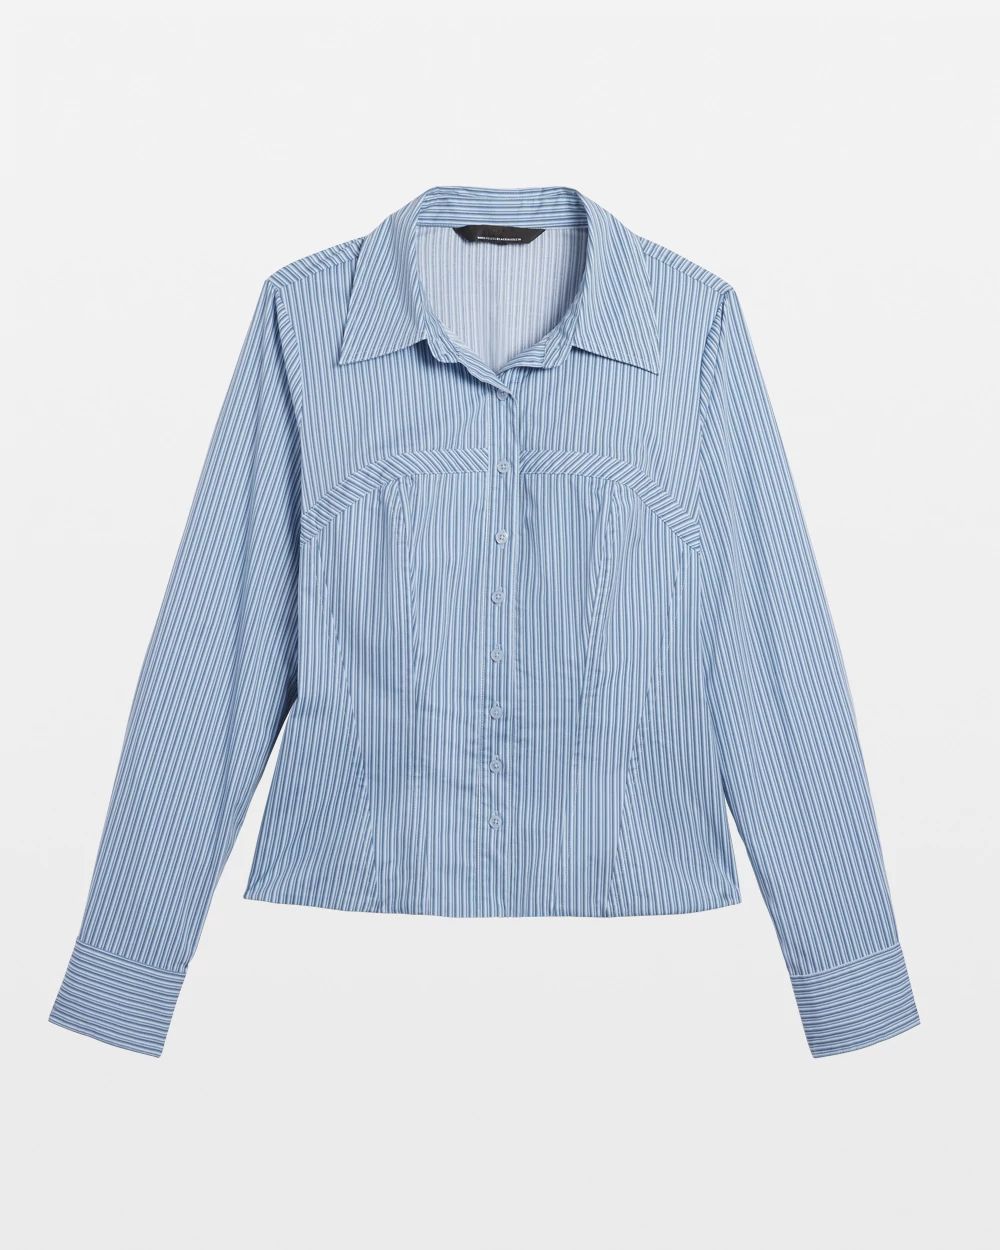 Petite Long Sleeve Corset Poplin Shirt click to view larger image.